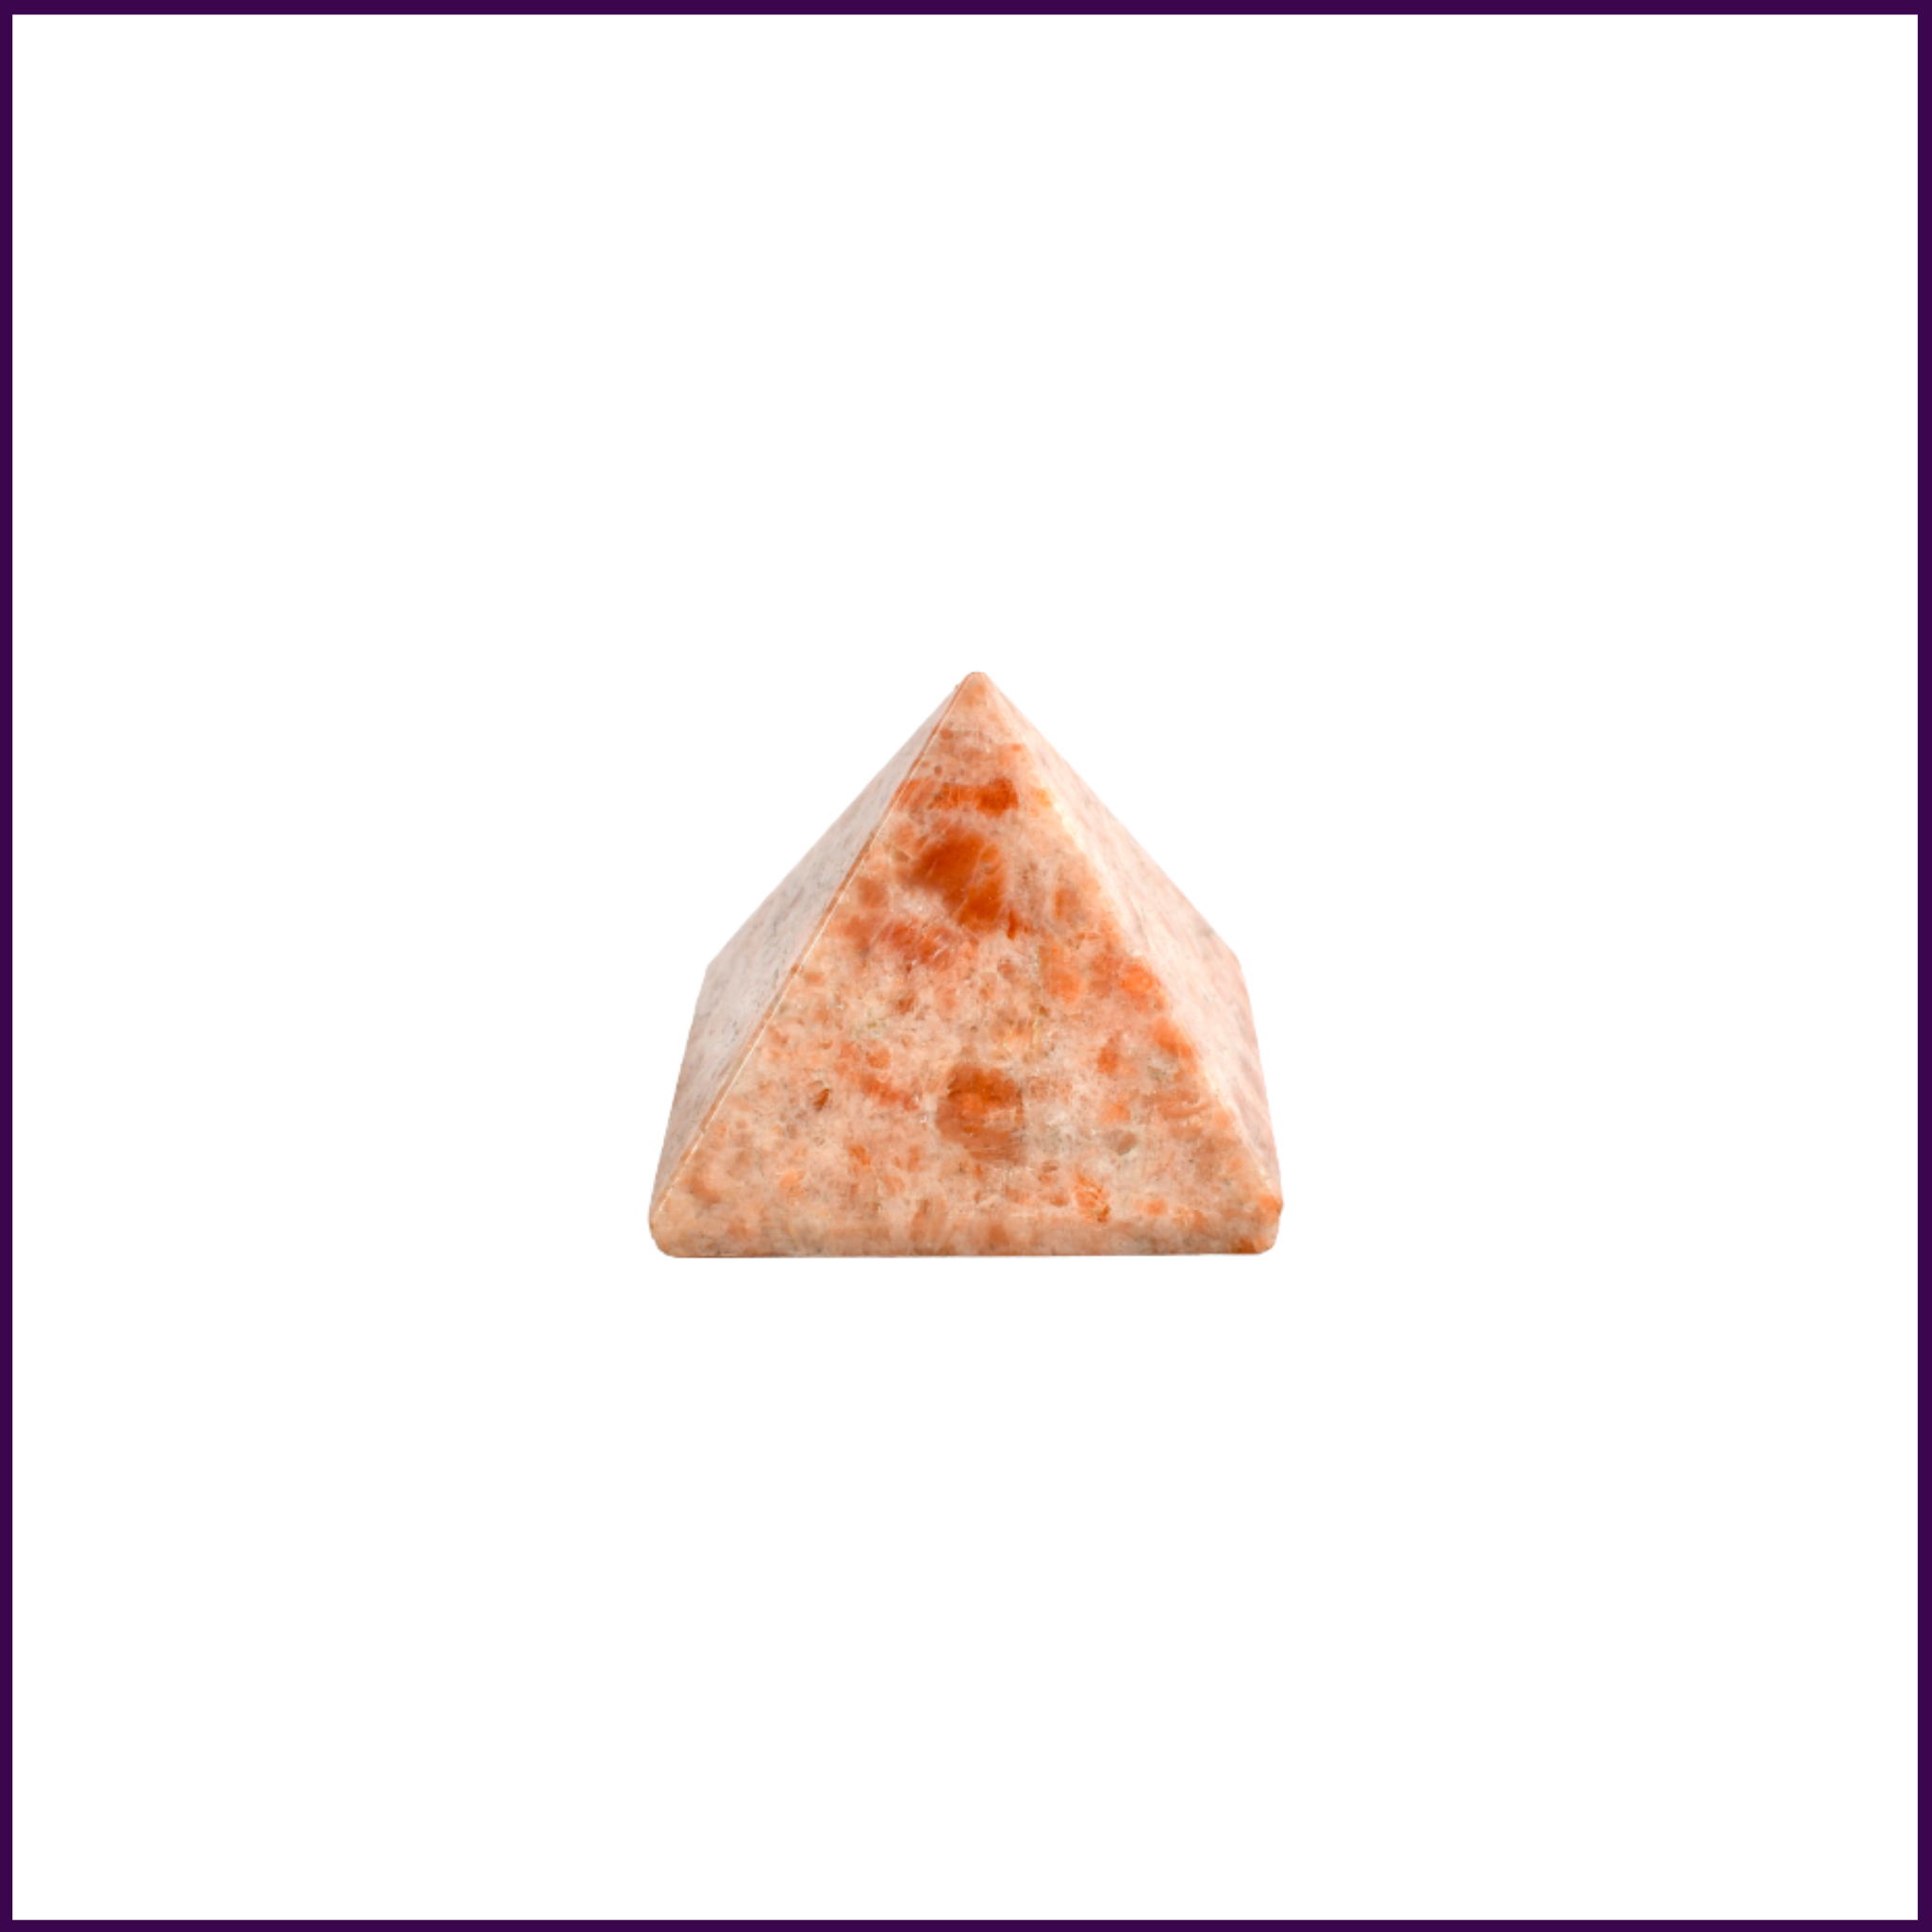 Career Development Kit - 2 Pyramid Meditation Head Caps + 1 Sunstone Crystal Pyramid (2inch) For Career Development